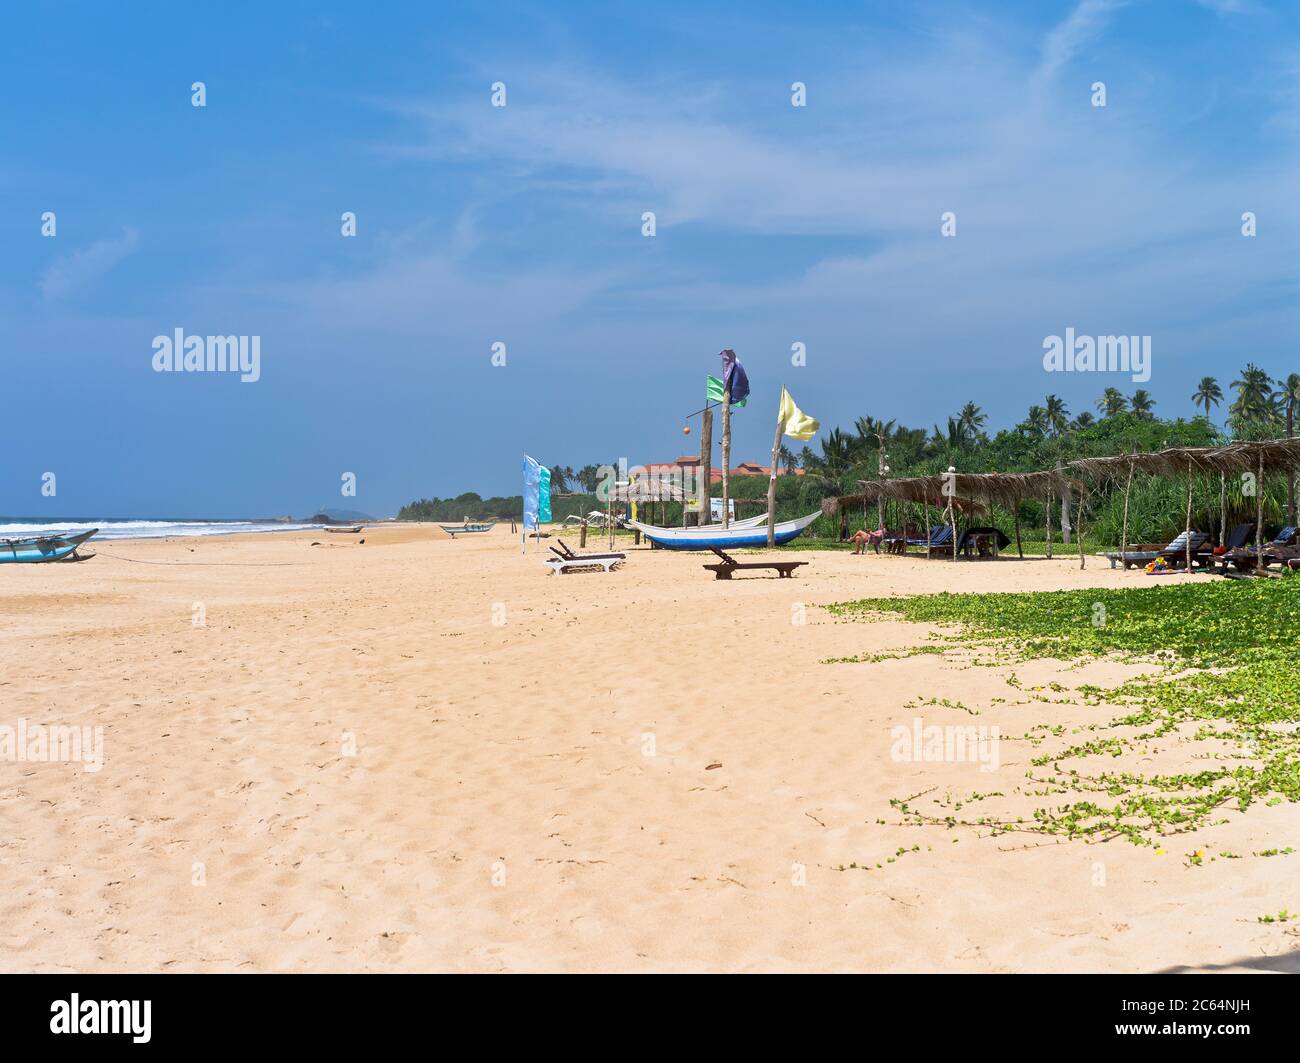 dh Robolgoda Beach Galle Road BENTOTA SRI LANKA Sri Lankan West coast hotel beaches flags sand shore asia Stock Photo